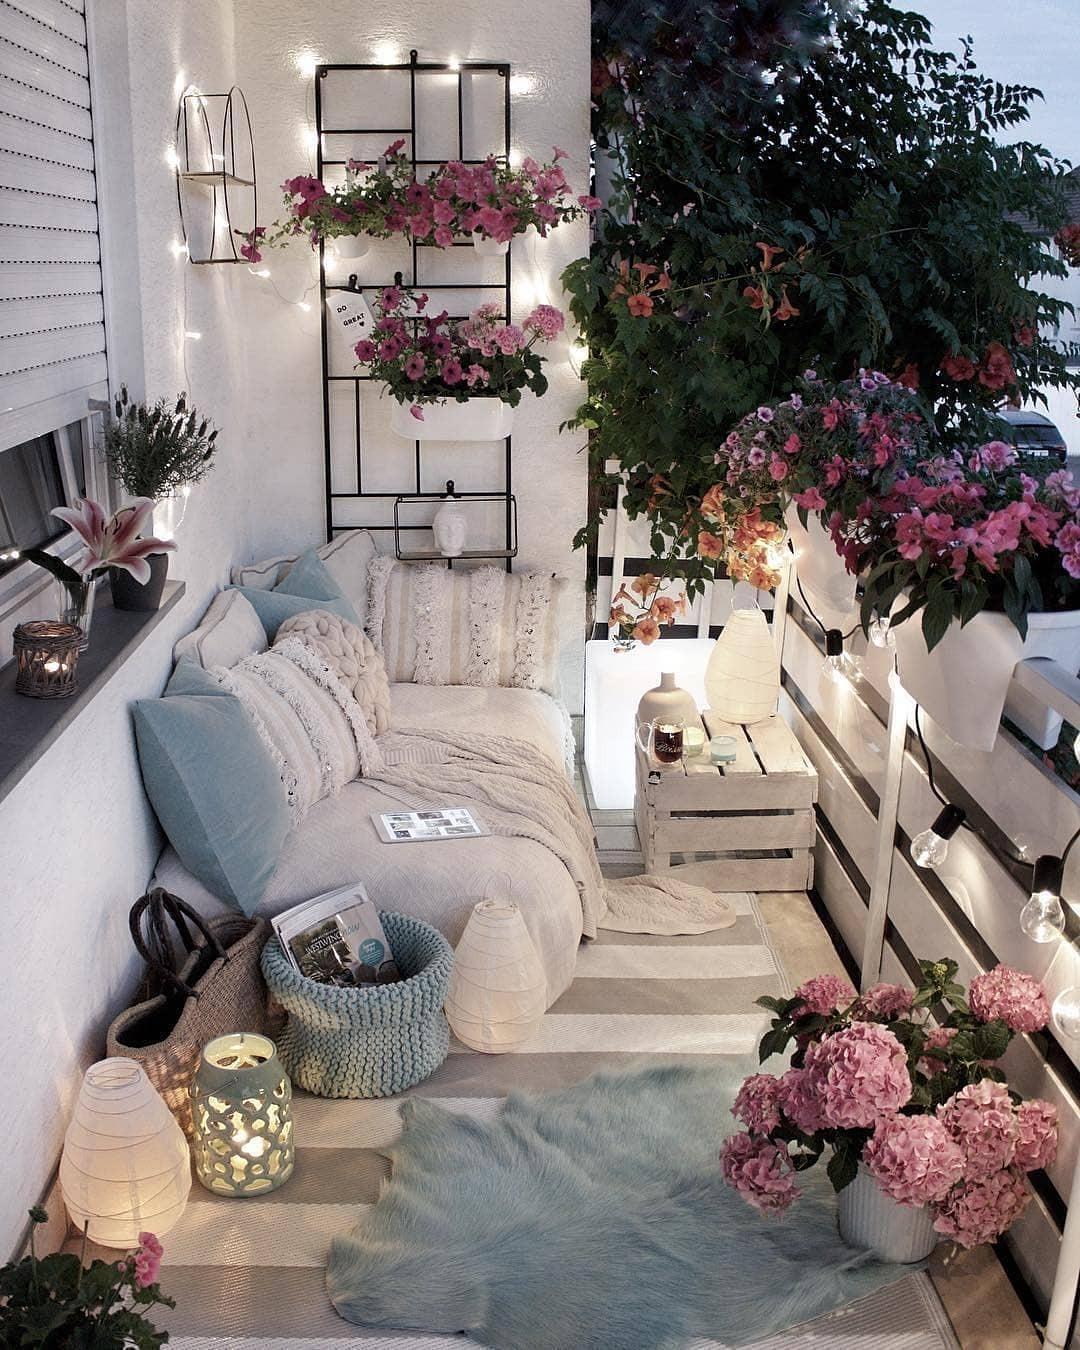 Small balcony made cozy using soft string lighting